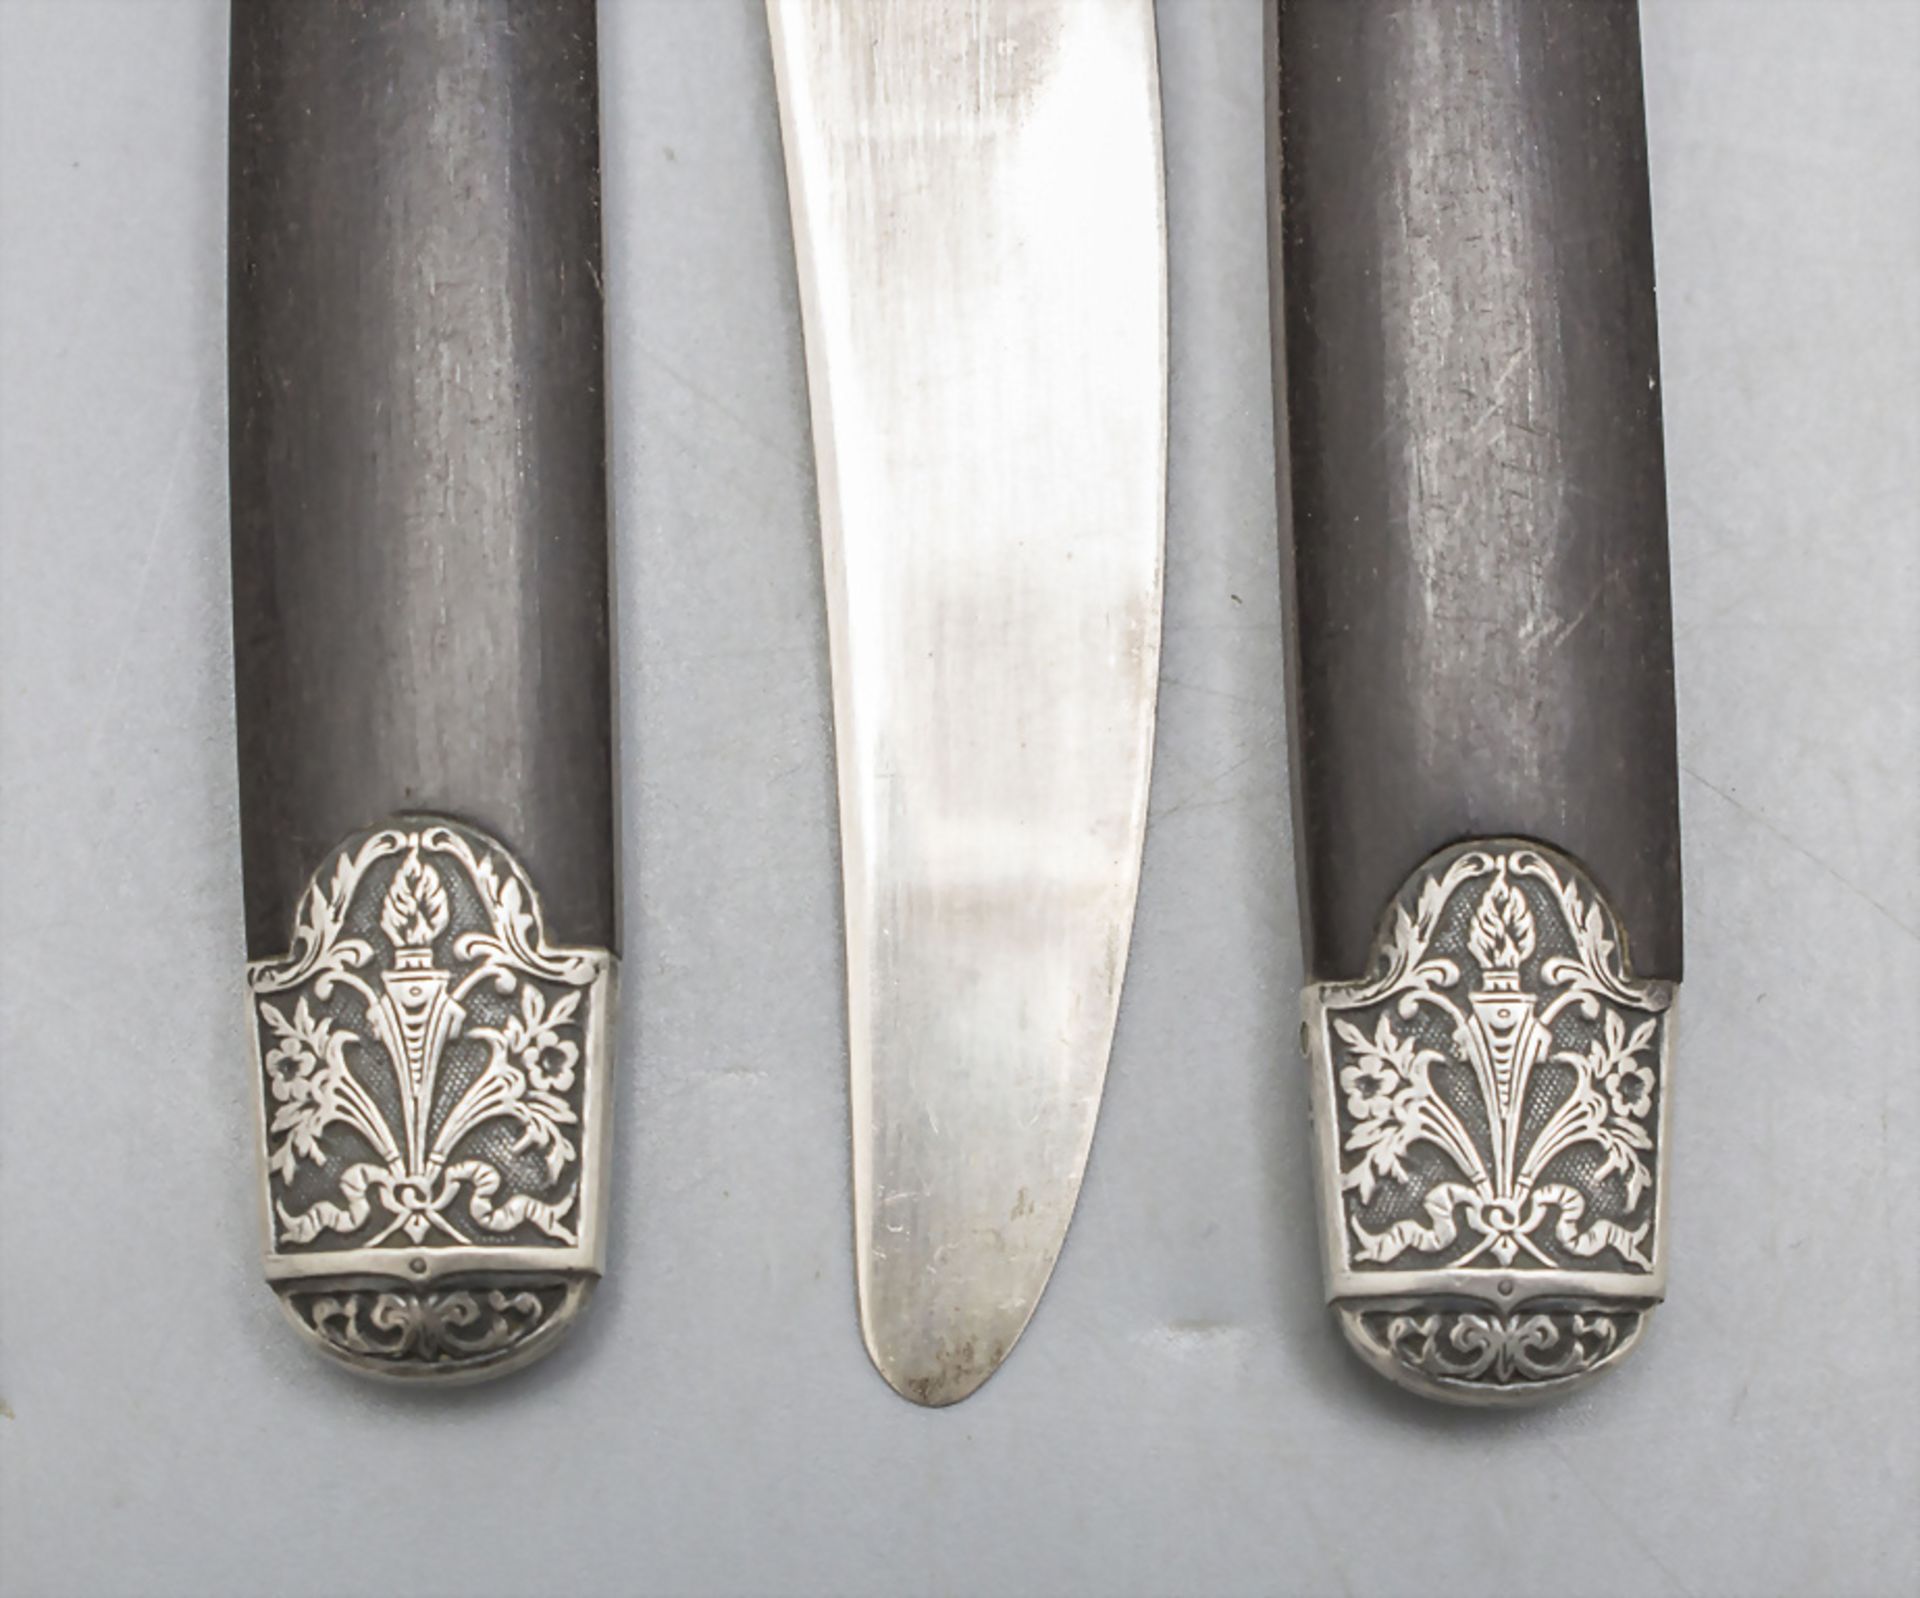 15 Obstmesser / 15 silver fruit knives, Frankreich, Paris, Mitte/Ende 19. Jh. - Image 3 of 4